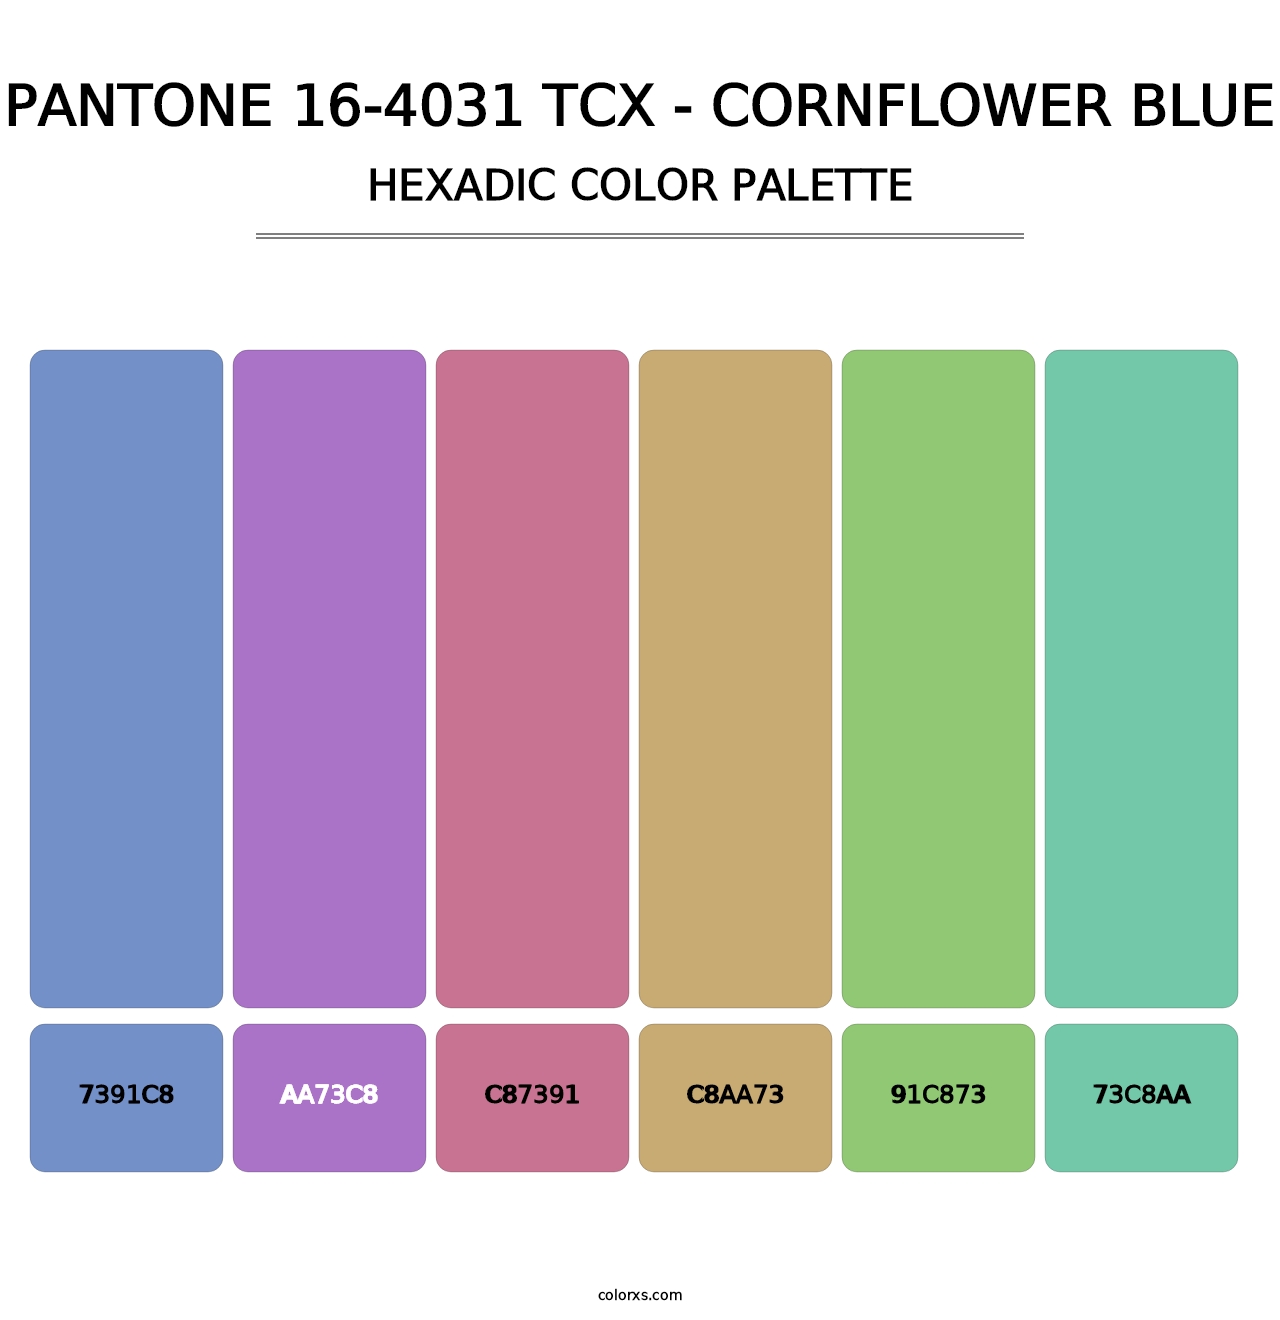 PANTONE 16-4031 TCX - Cornflower Blue - Hexadic Color Palette